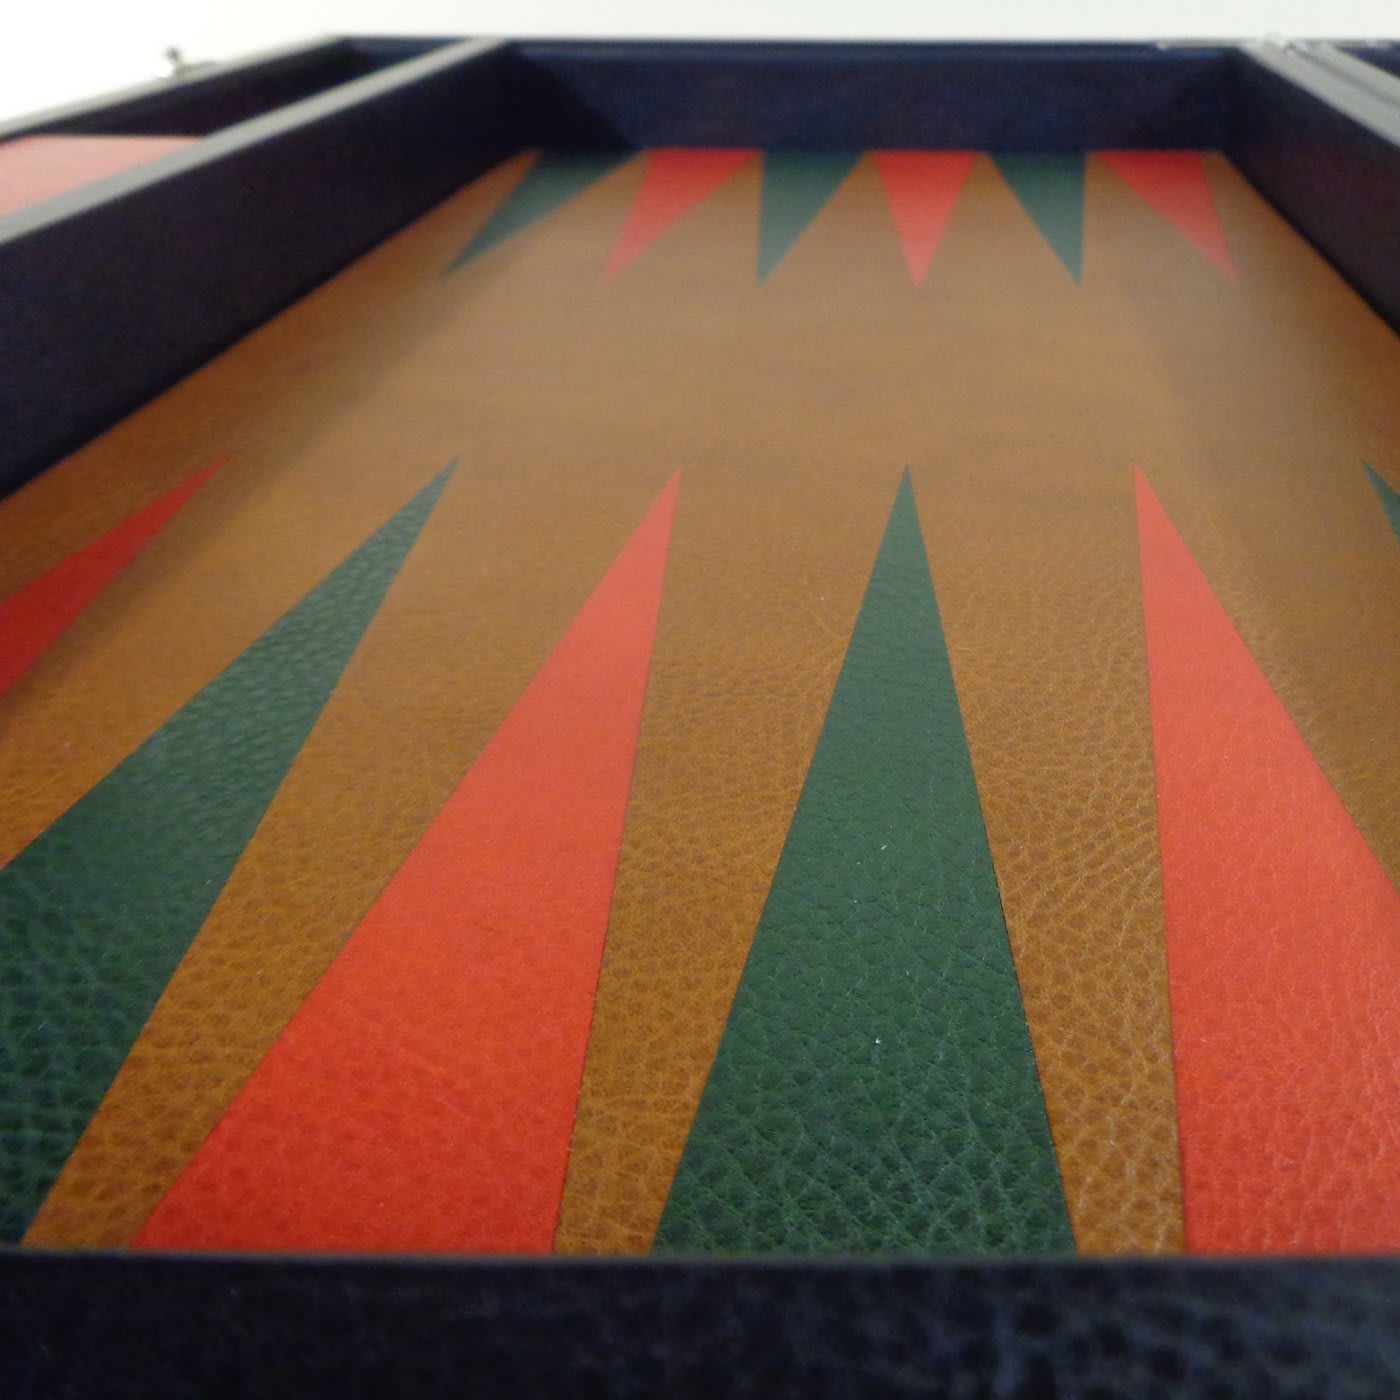 Leather Backgammon Set - AtelierGK Firenze